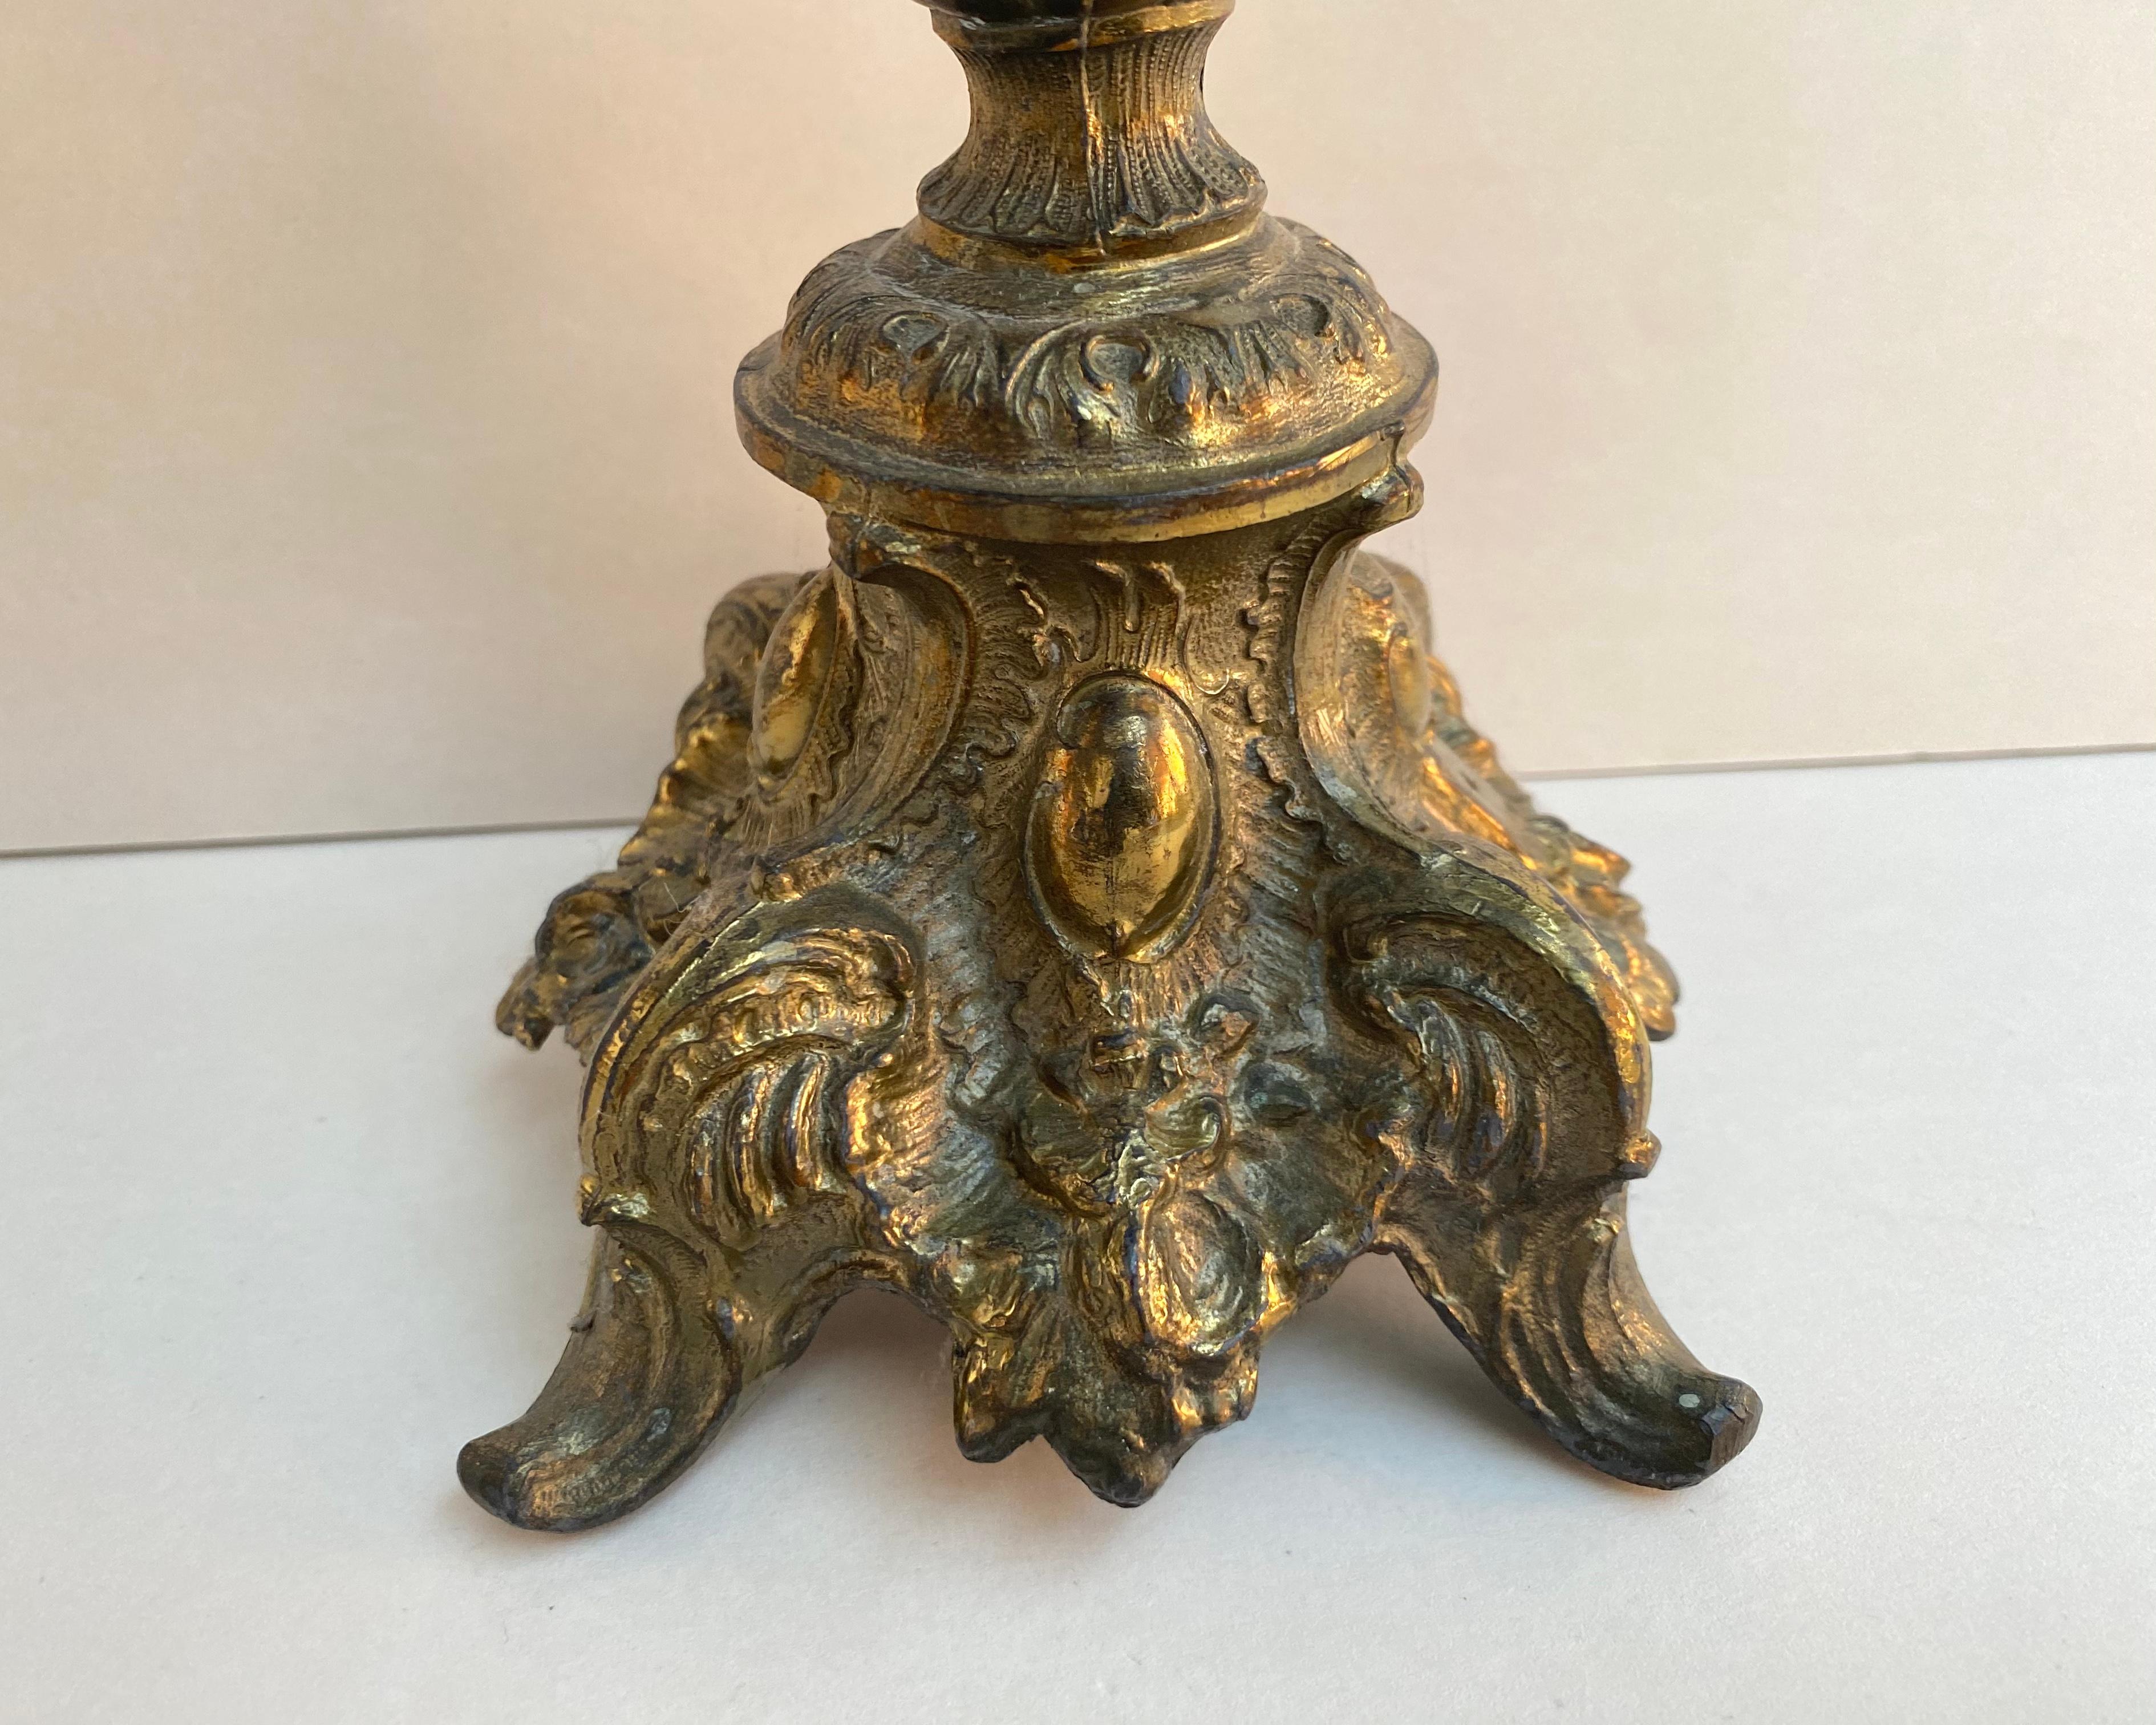 French Ornate Antique Candlestick Holder in Brass, France, 1900 3 Arm Candleholder